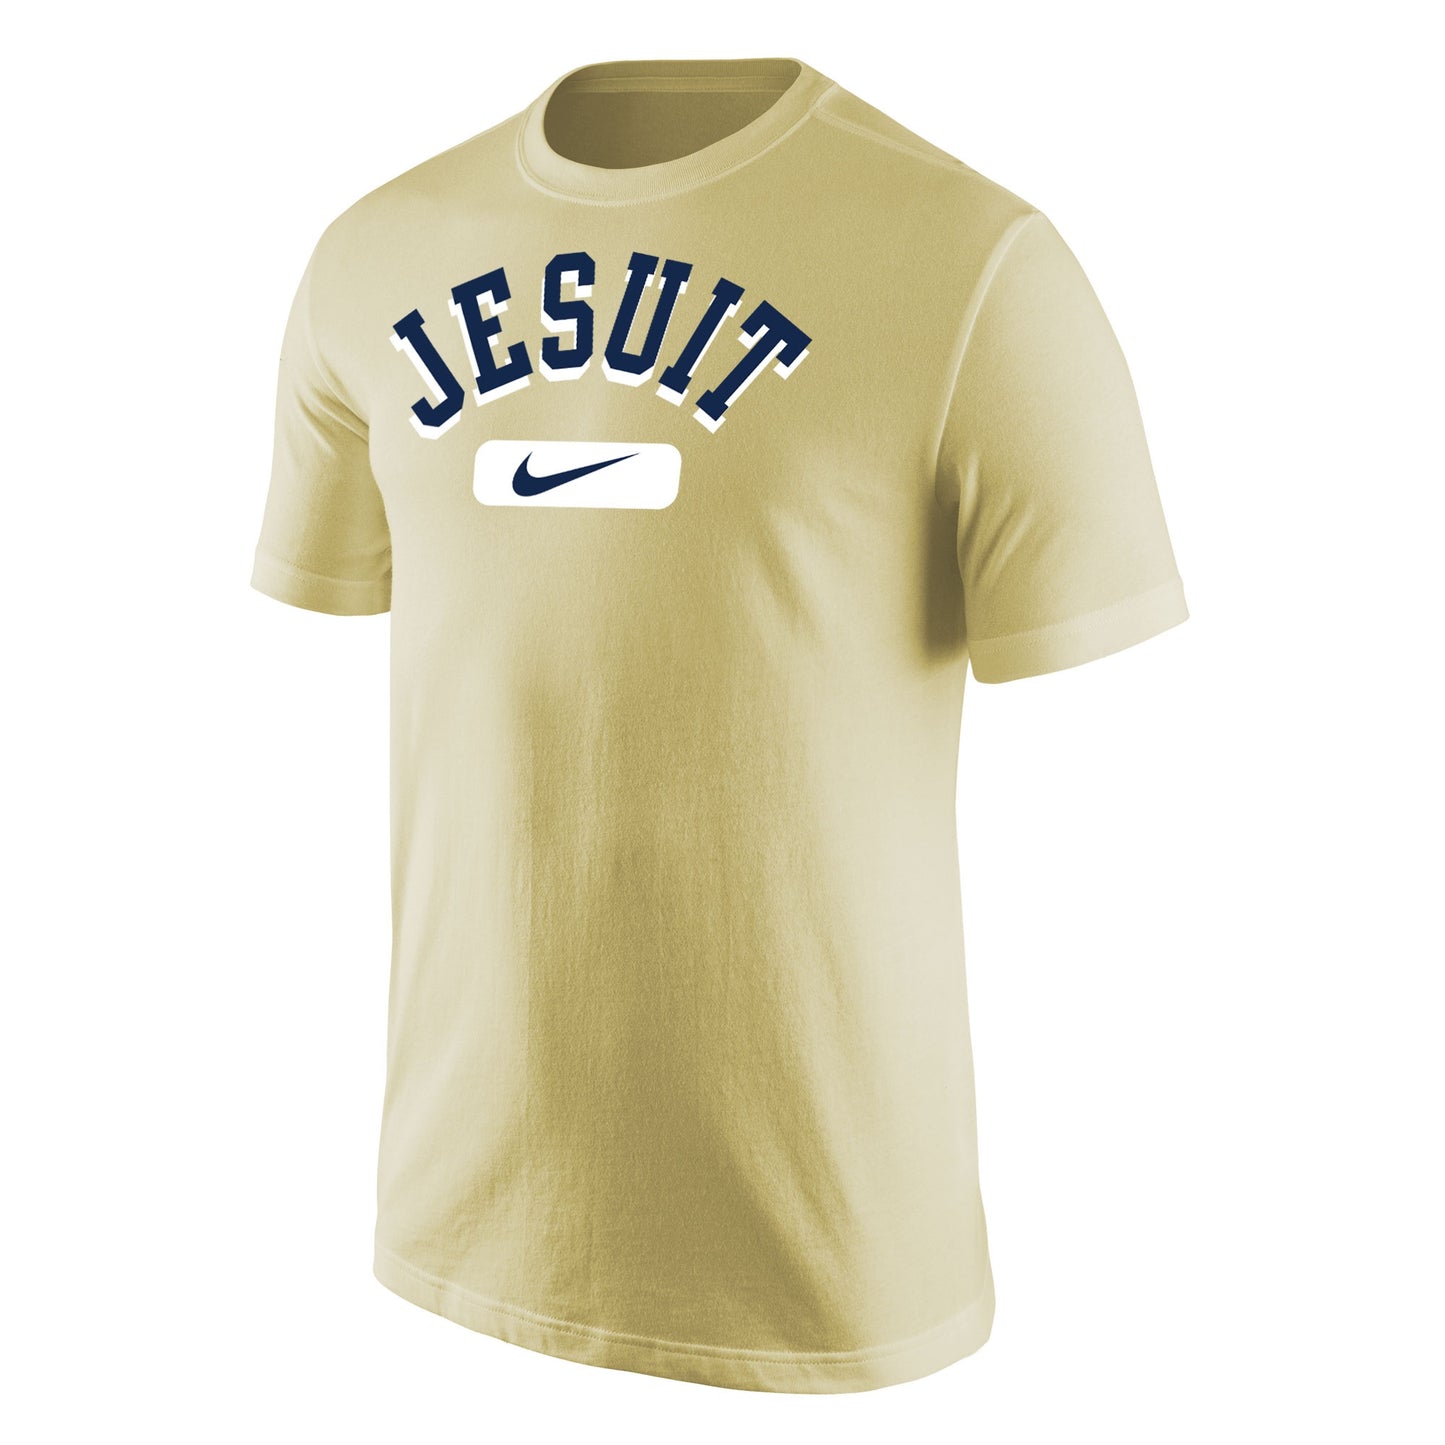 Nike Core Gold Jesuit Tee